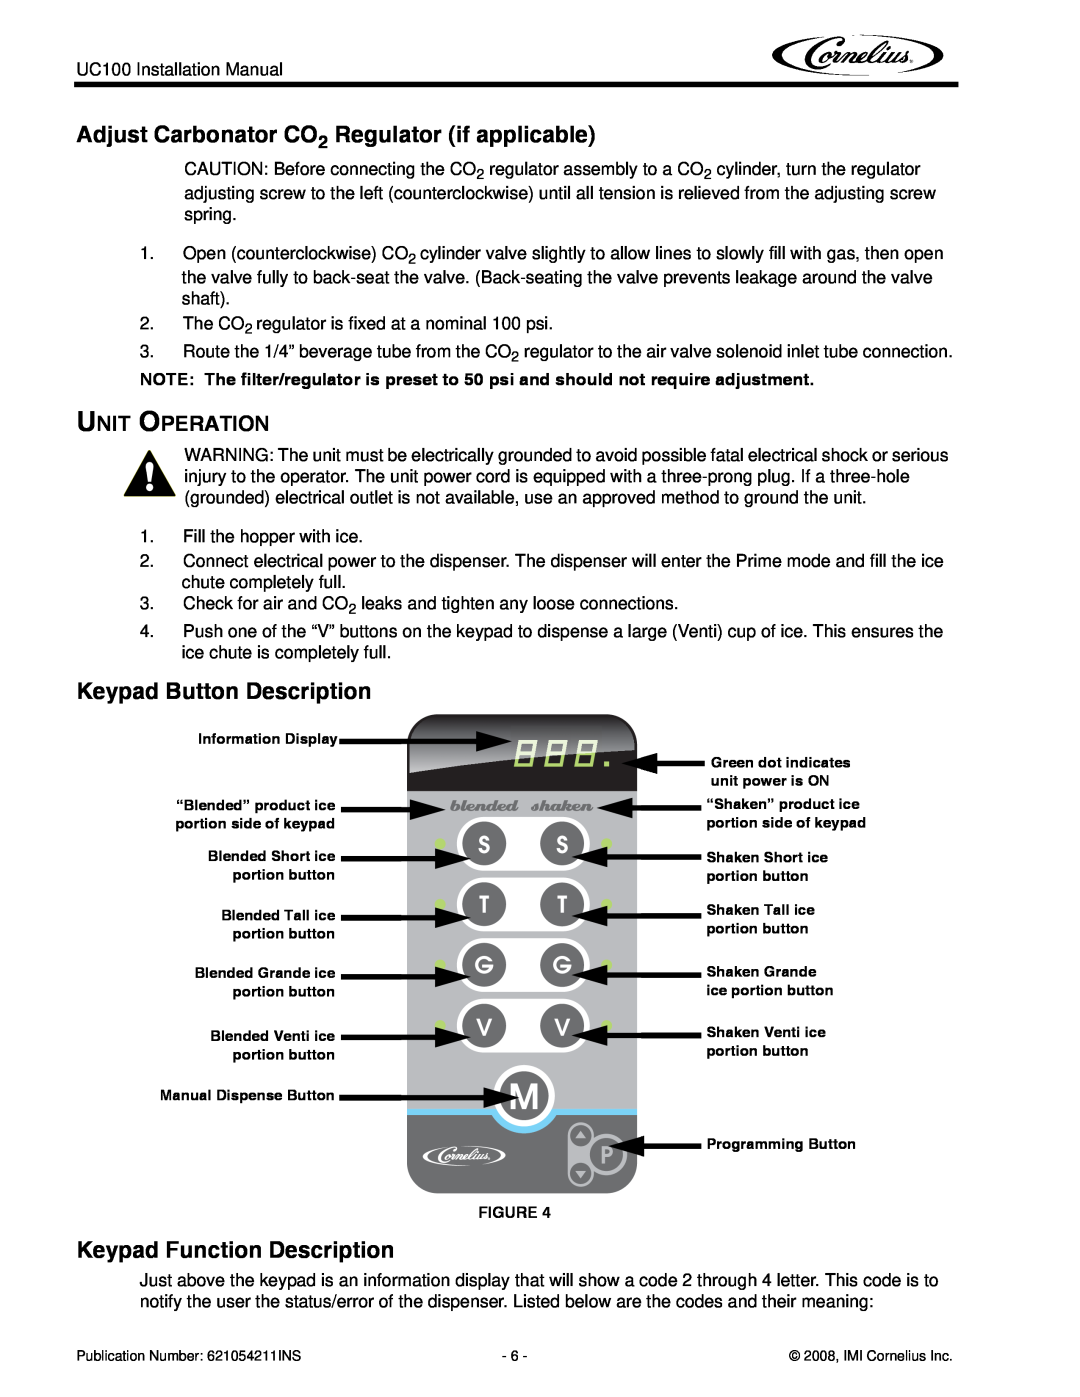 Cornelius UC100 Adjust Carbonator CO2 Regulator if applicable, Keypad Button Description, Keypad Function Description 